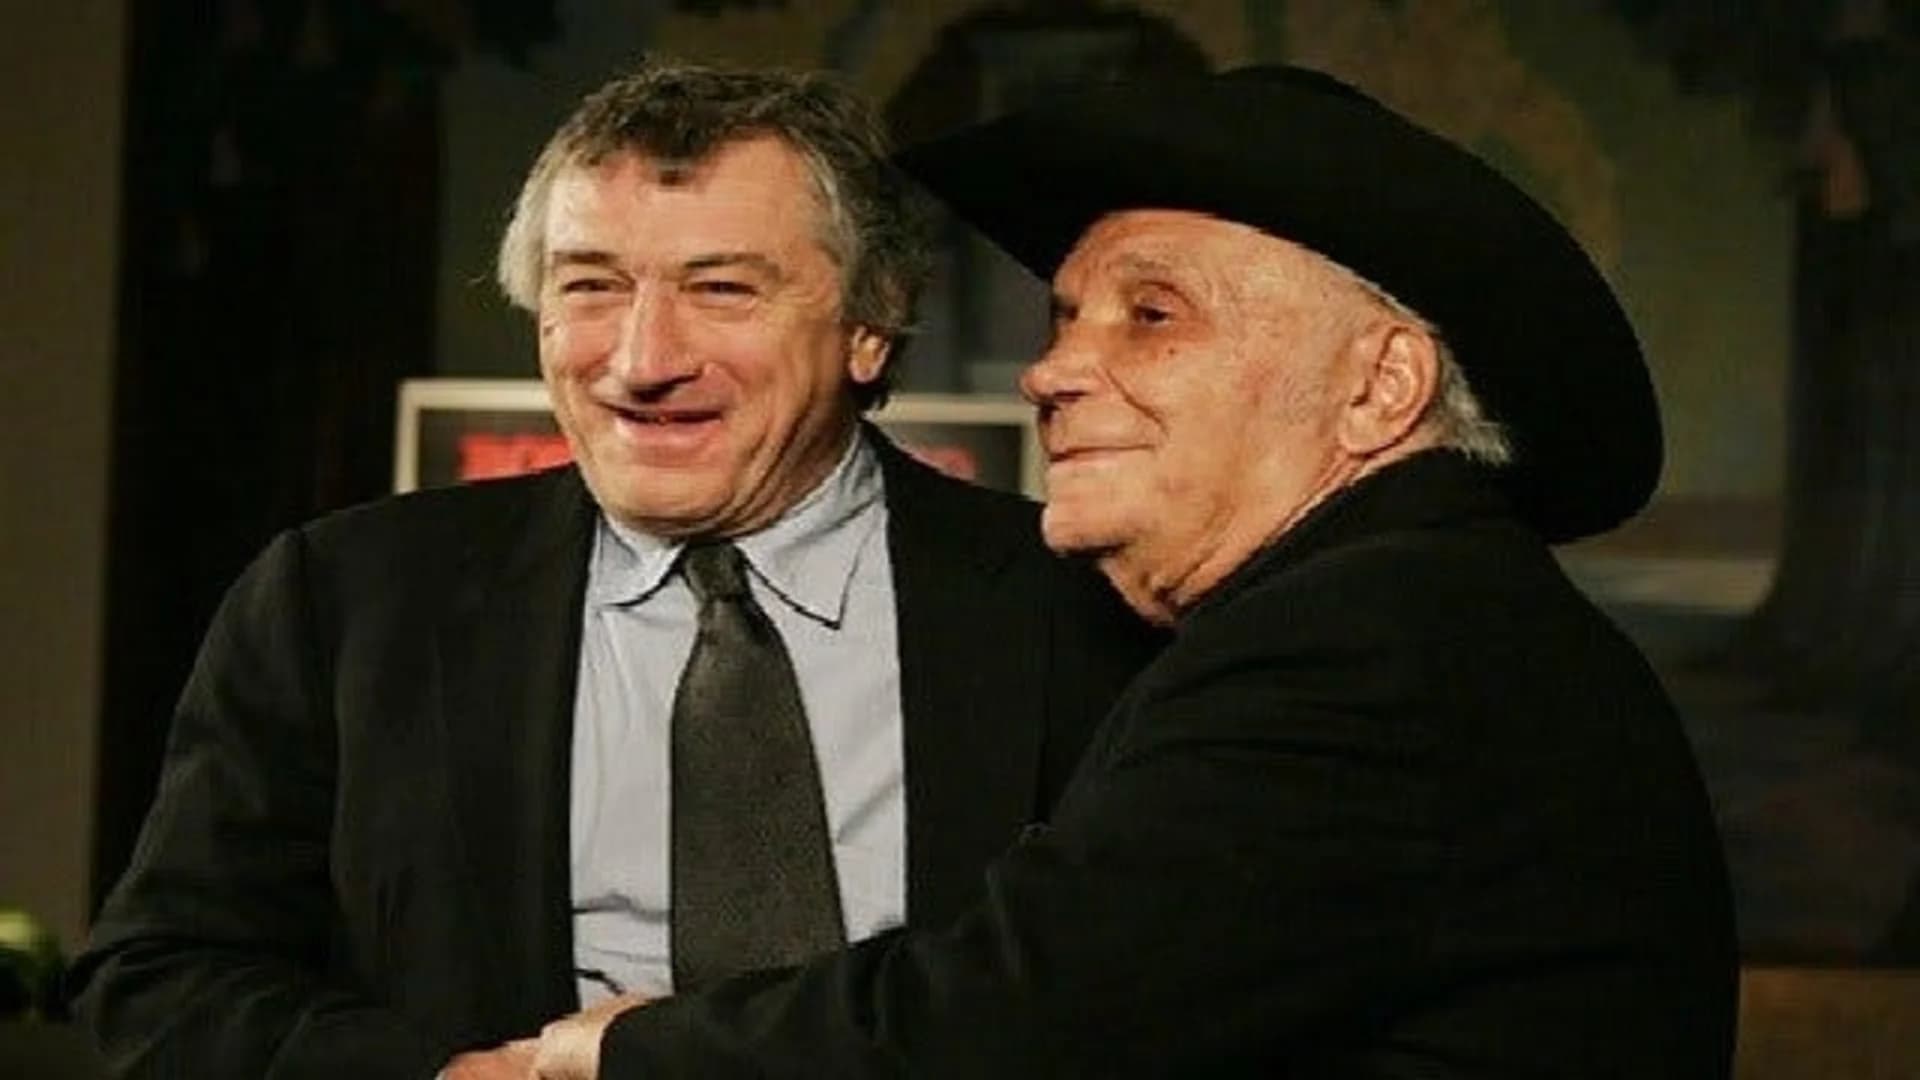 Boxer LaMotta, immortalized in 'Raging Bull,' dies at 95